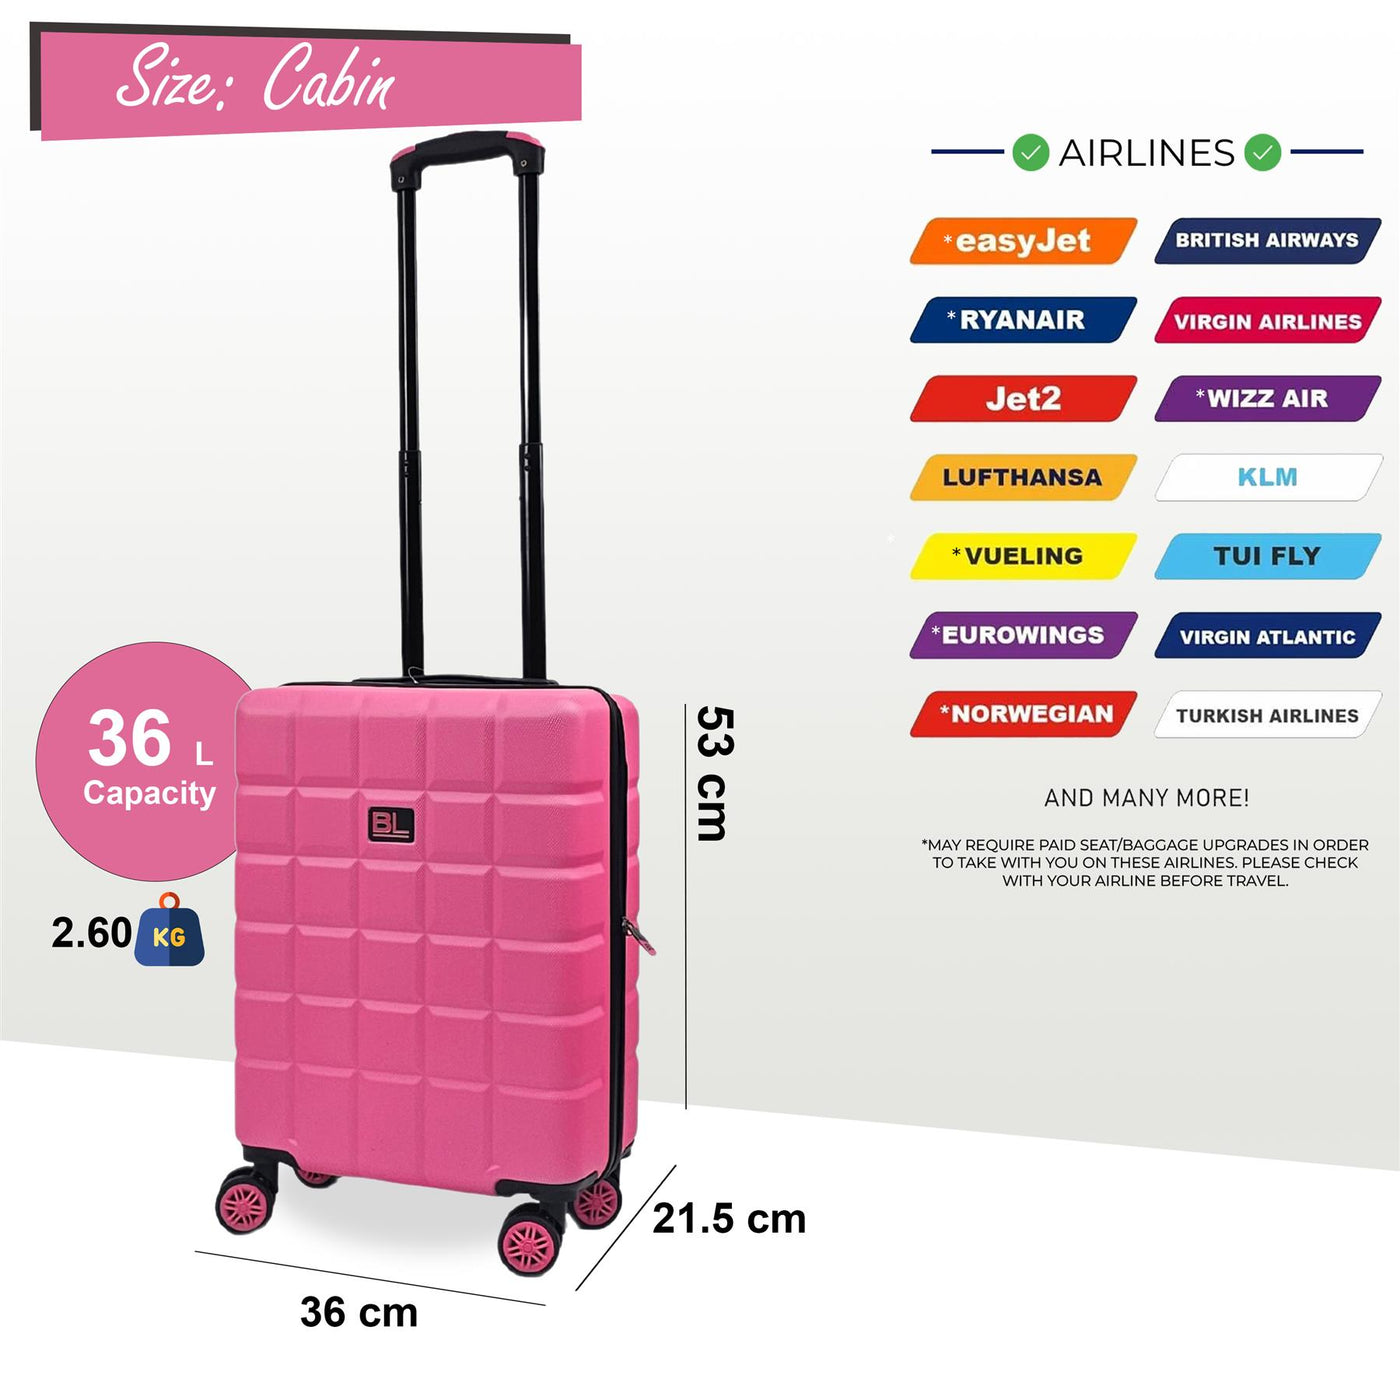 Hard Shell Classic Suitcase Set 8 Wheel Cabin Luggage Case Travel Bag